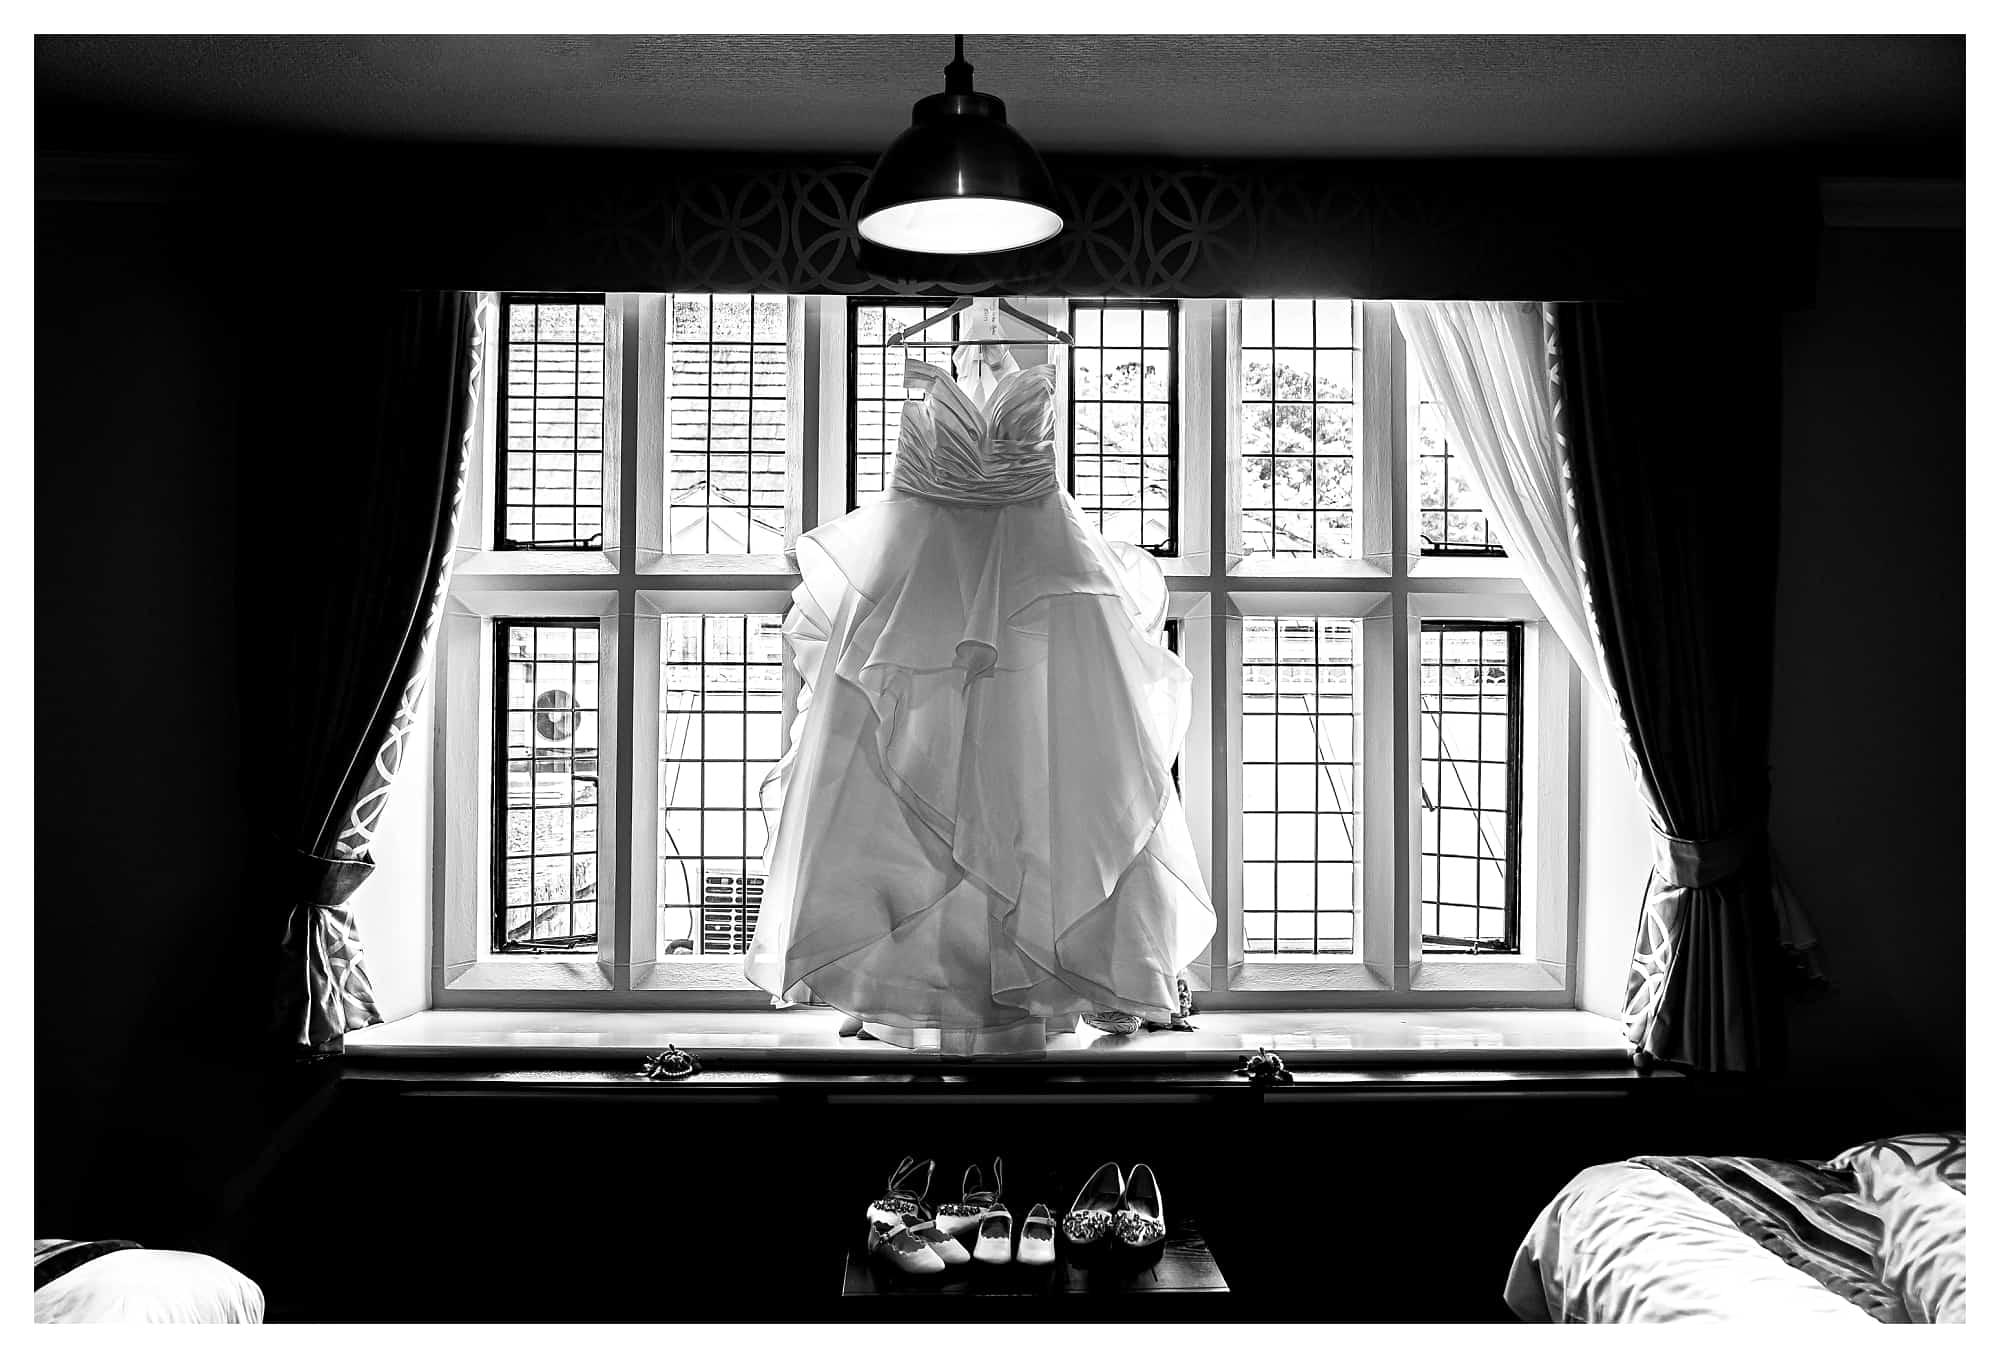 wedding dress photograph, wedding dress hanging in rogerthorpe manor window